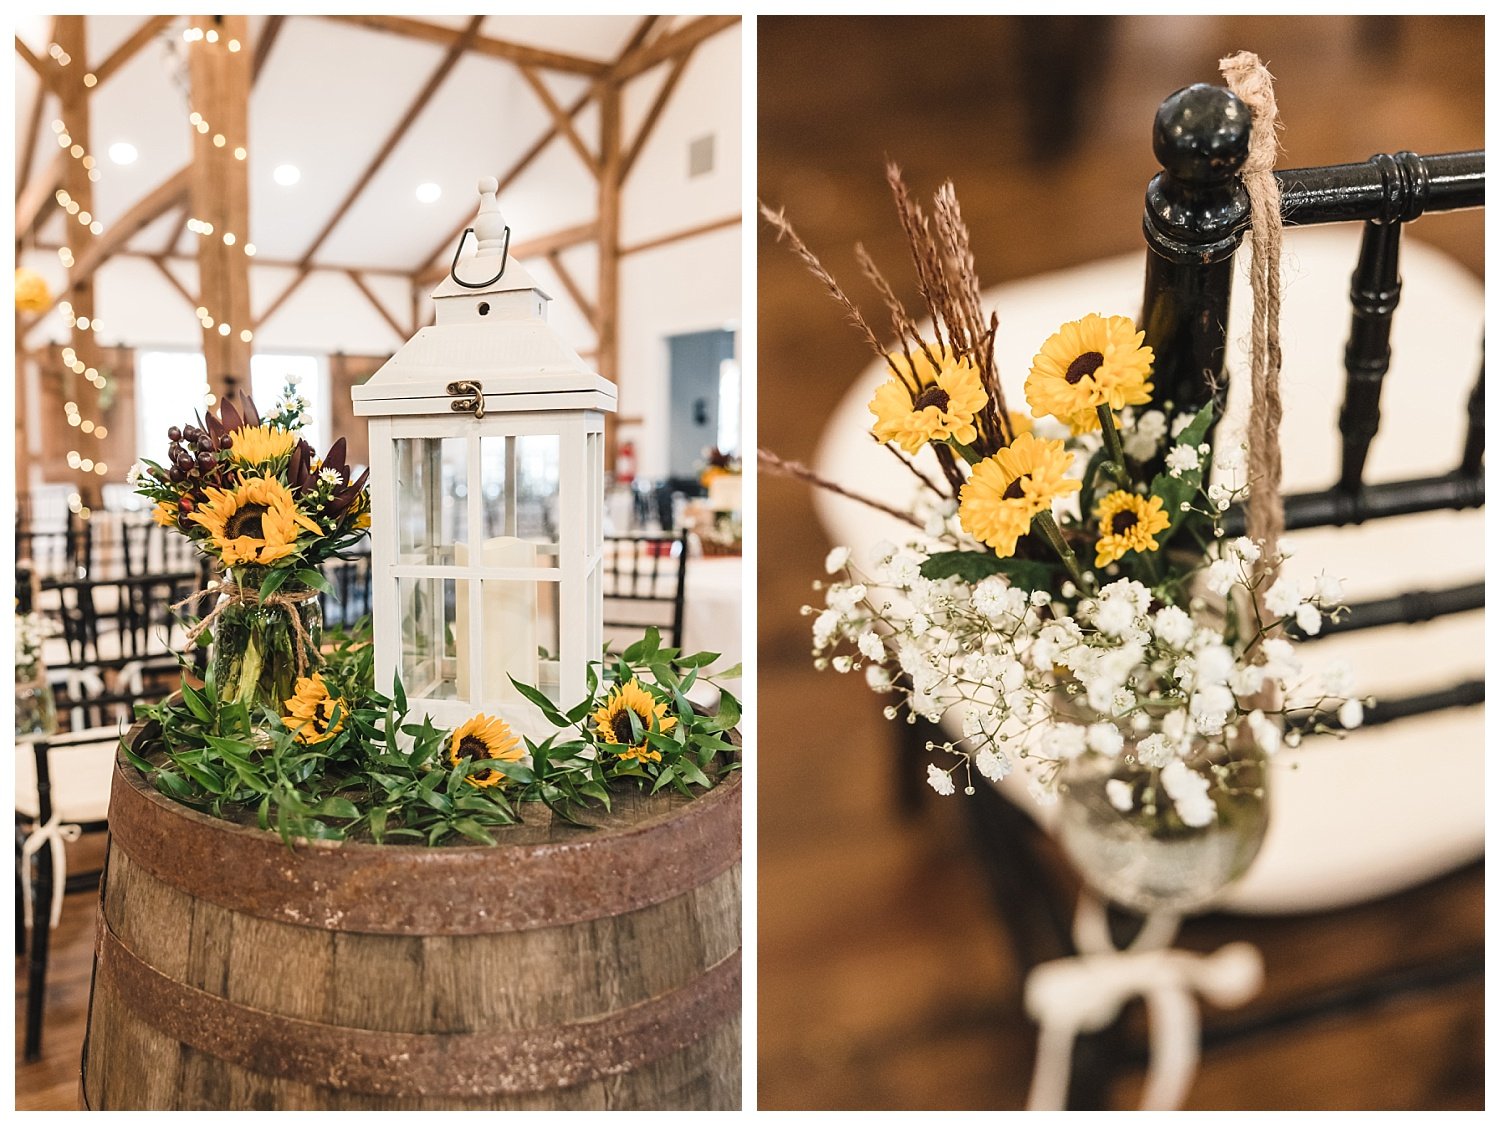 Osbornia Farm, Quarryville PA, wedding, barn wedding, rustic, sunflowers